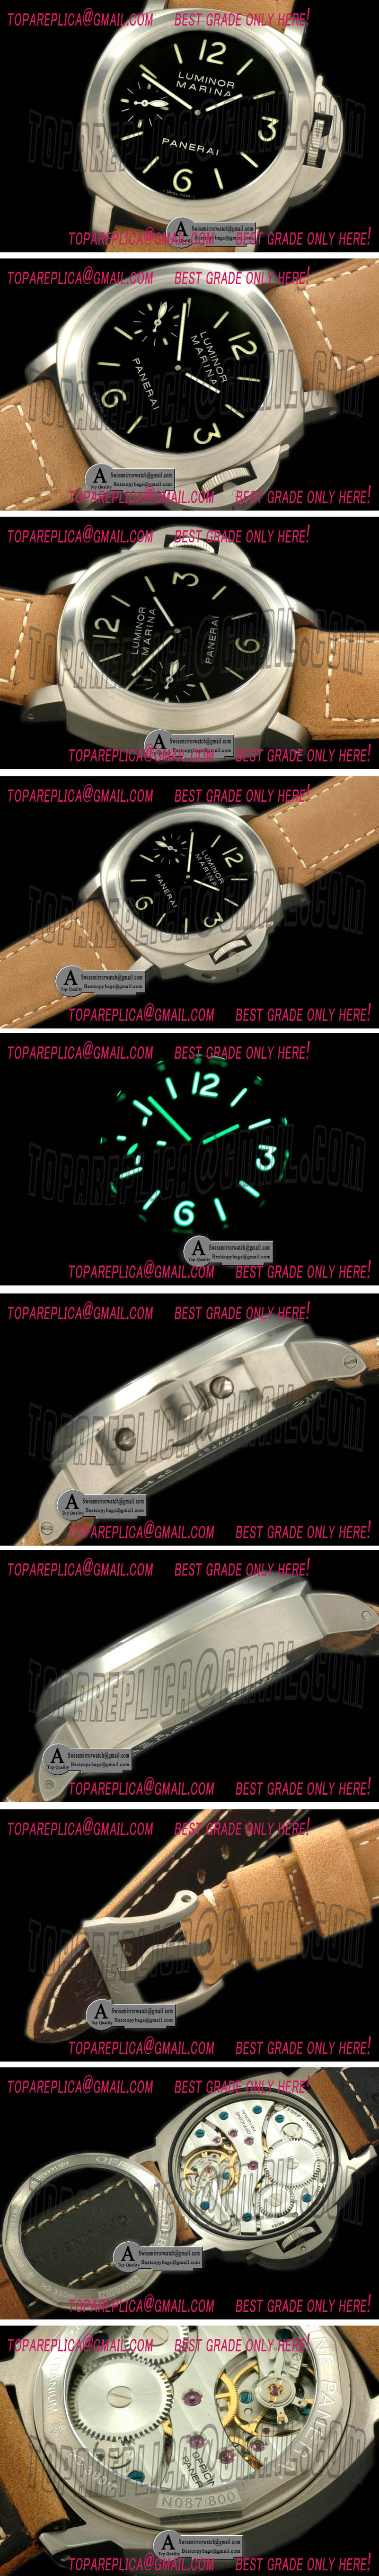 Replica Officine Panerai Luminor Marina 44mm Pam 177 N TI/Leather Black Asia 6497 Watches